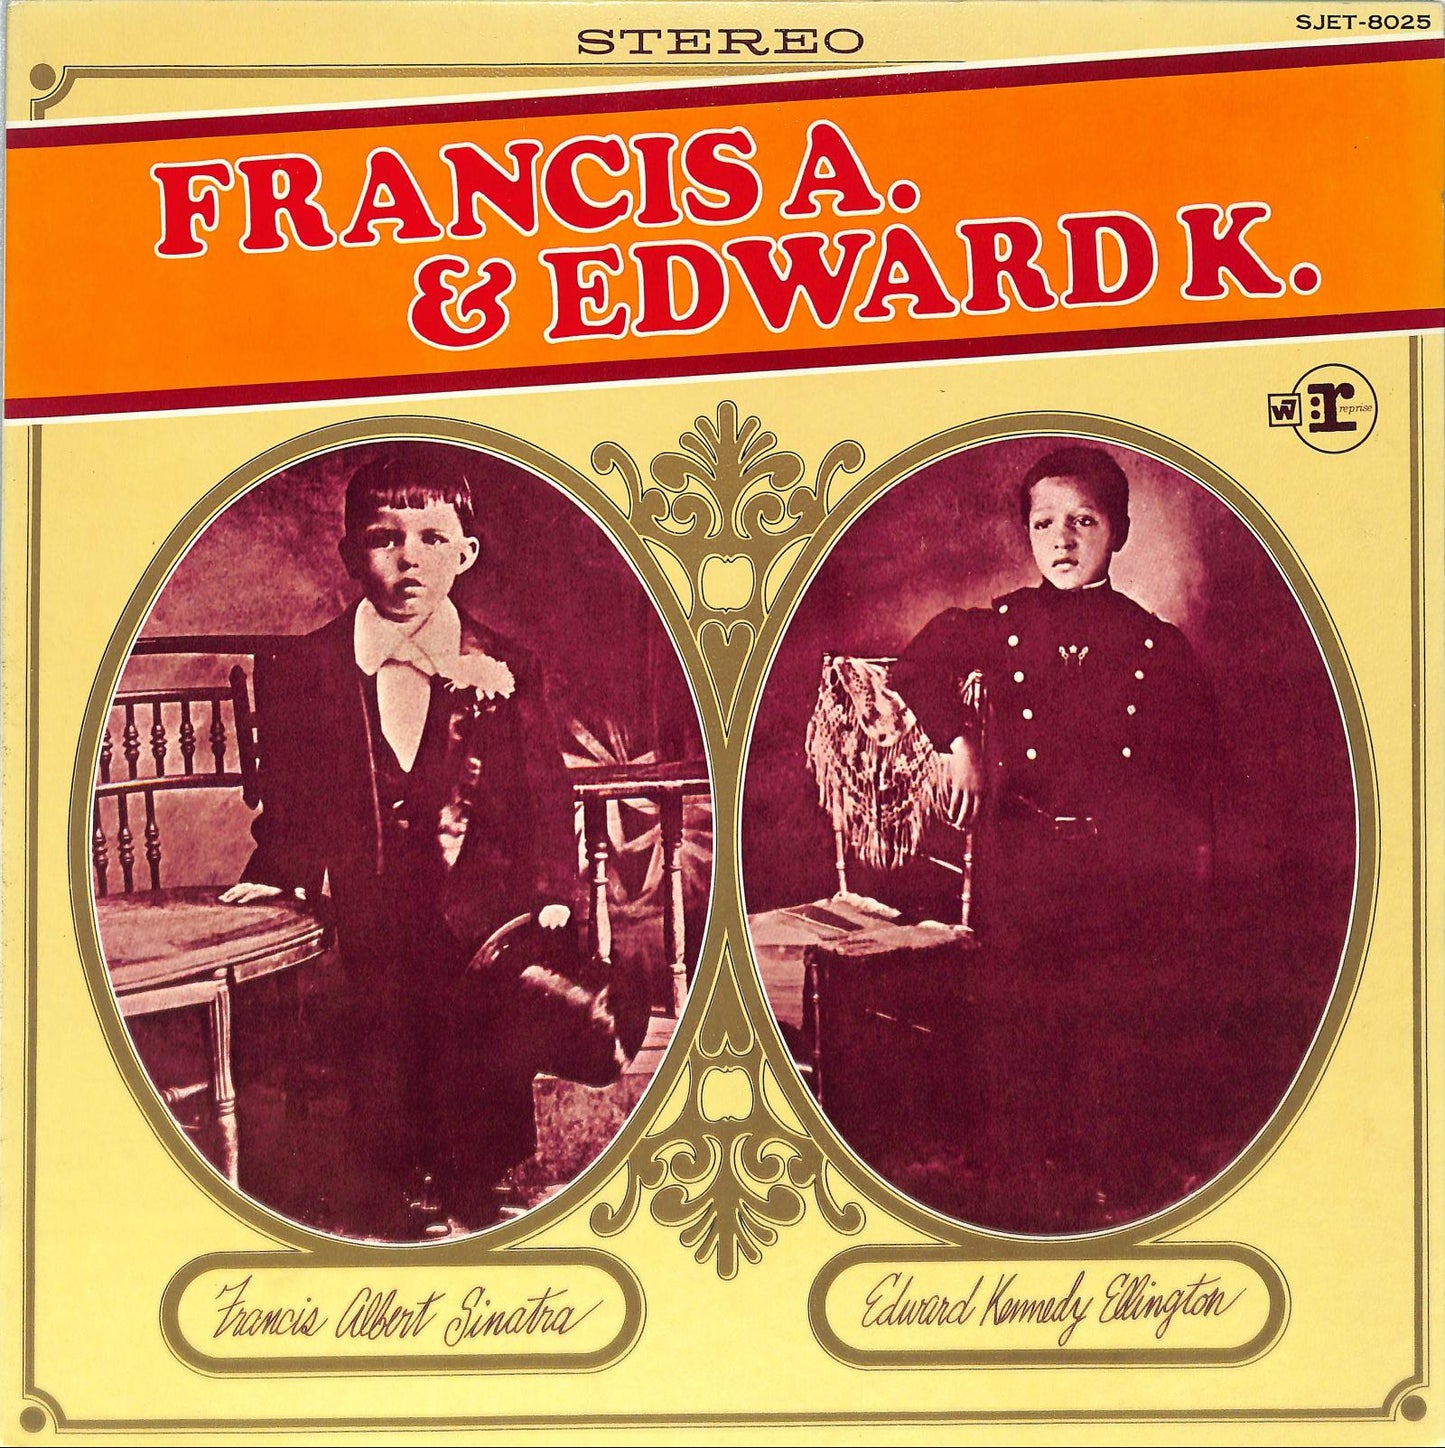 FRANK SINATRA WITH DUKE ELLINGTON - Francis A. & Edward K.